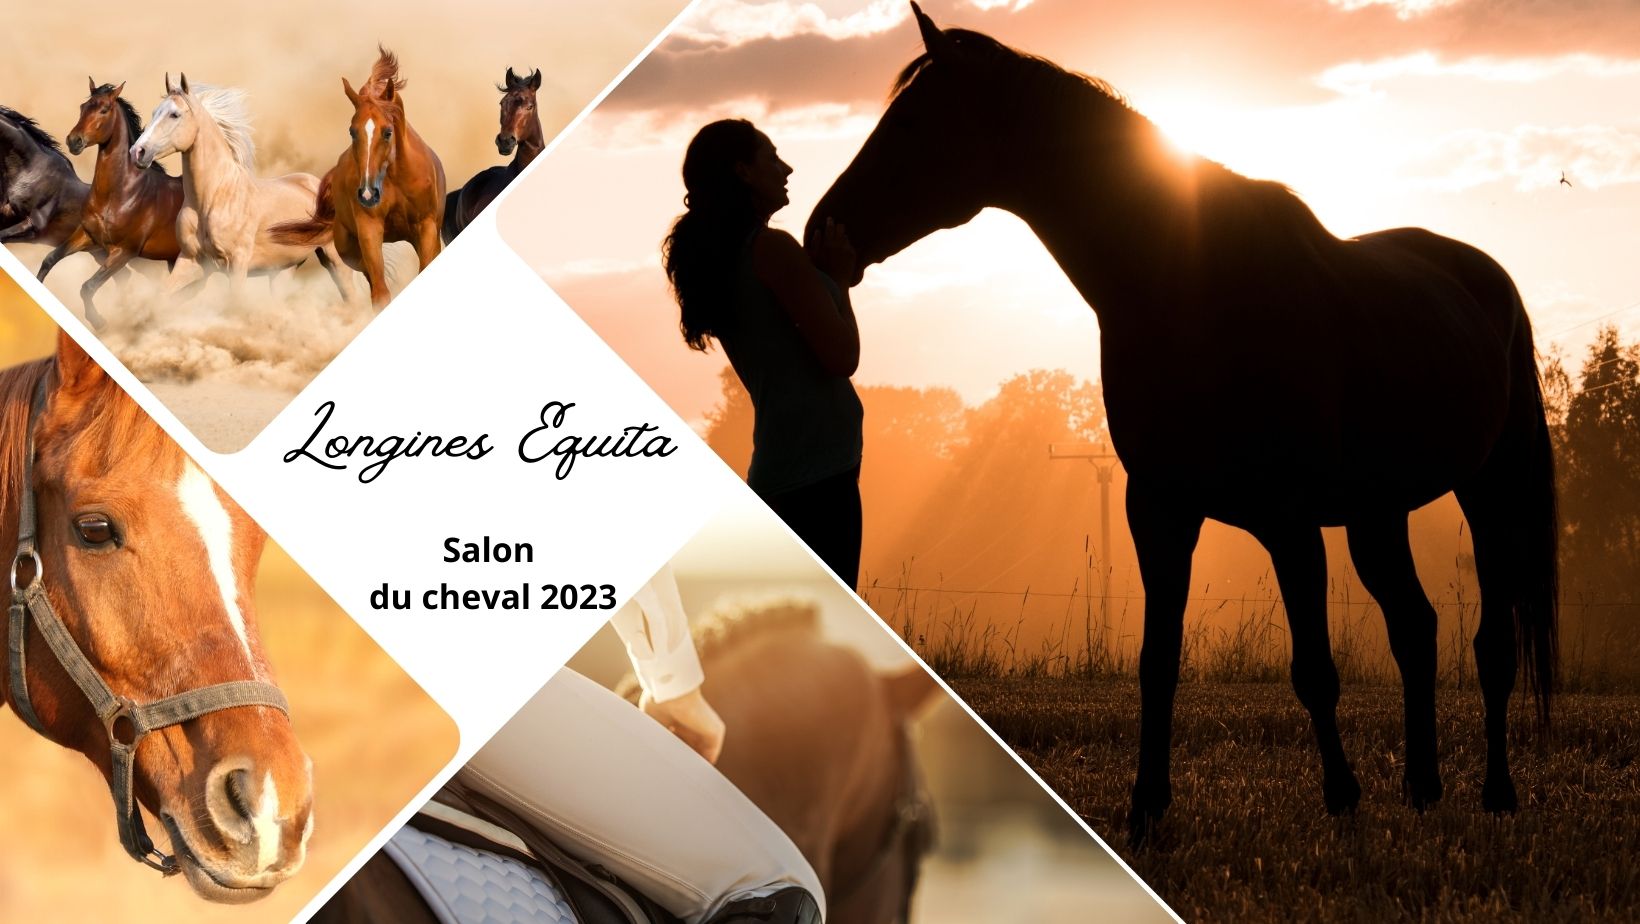 Longines Equita Lyon - Salon du cheval 2023